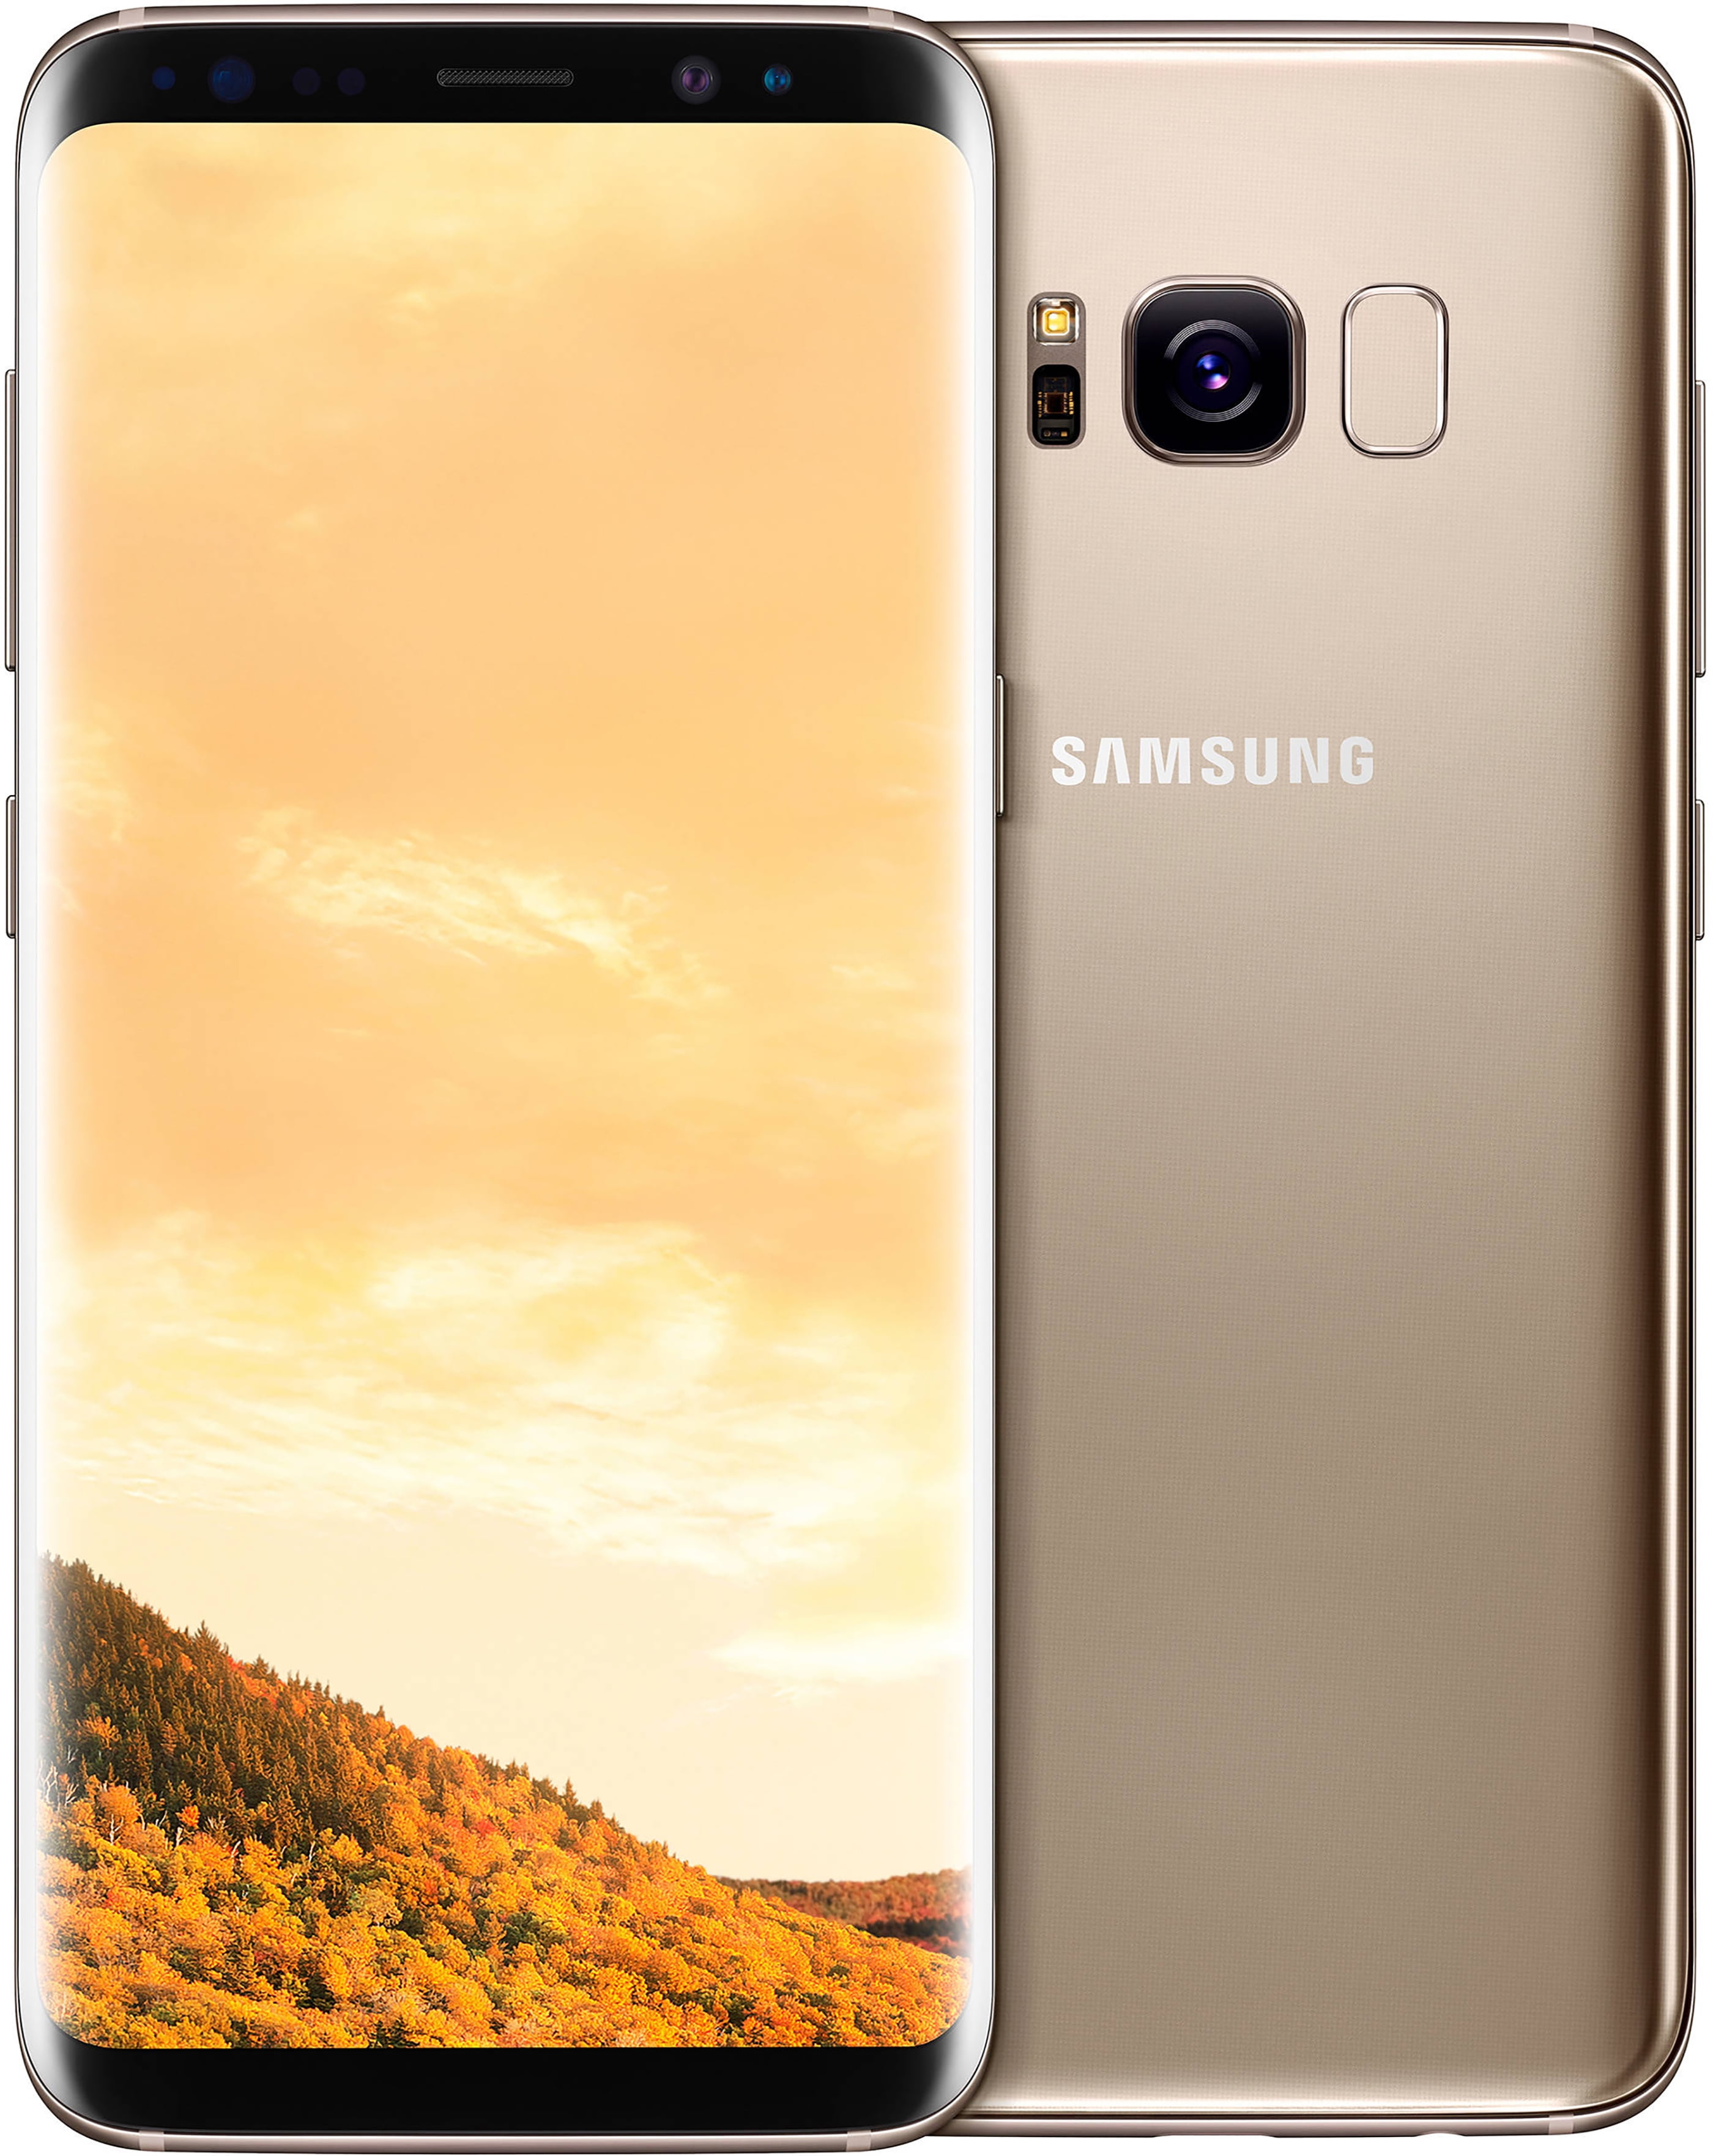 Samsung Galaxy S8 G950F 64GB Unlocked GSM Phone w/ 12MP Camera - Maple